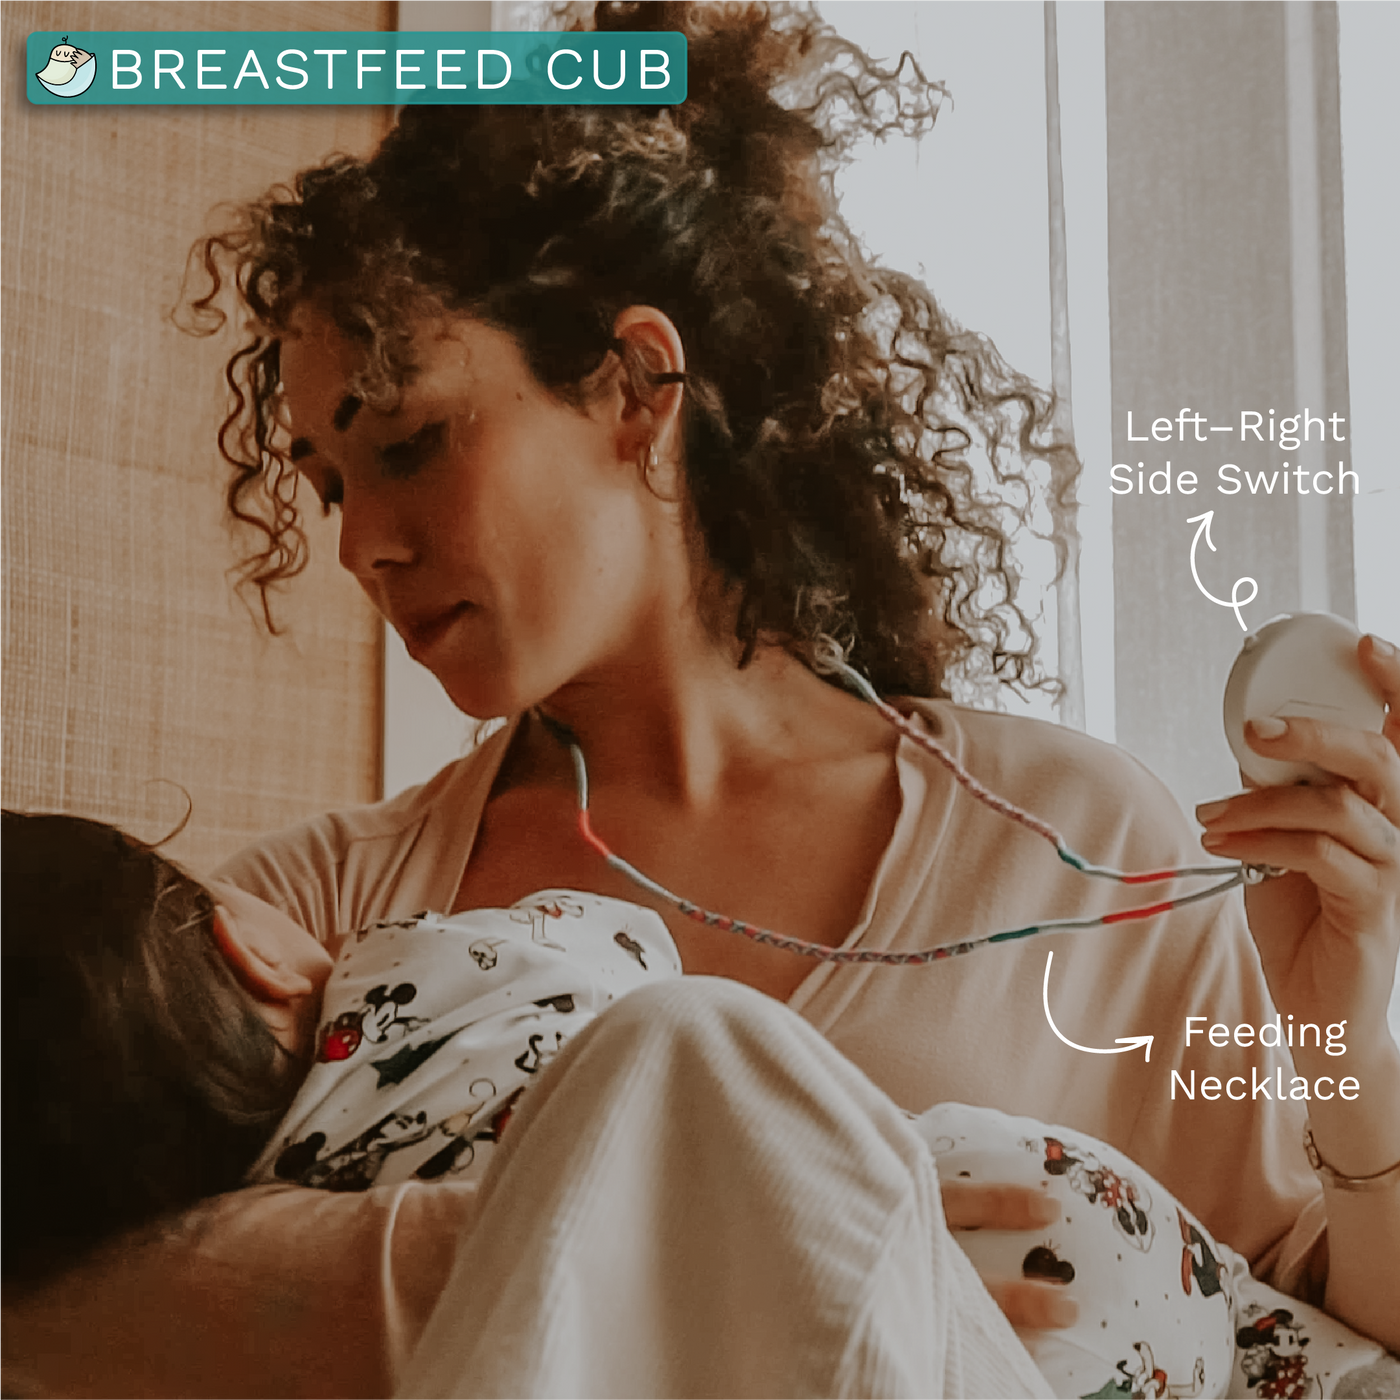 Smart Breastfeed Tracker - The Breastfeed Cub